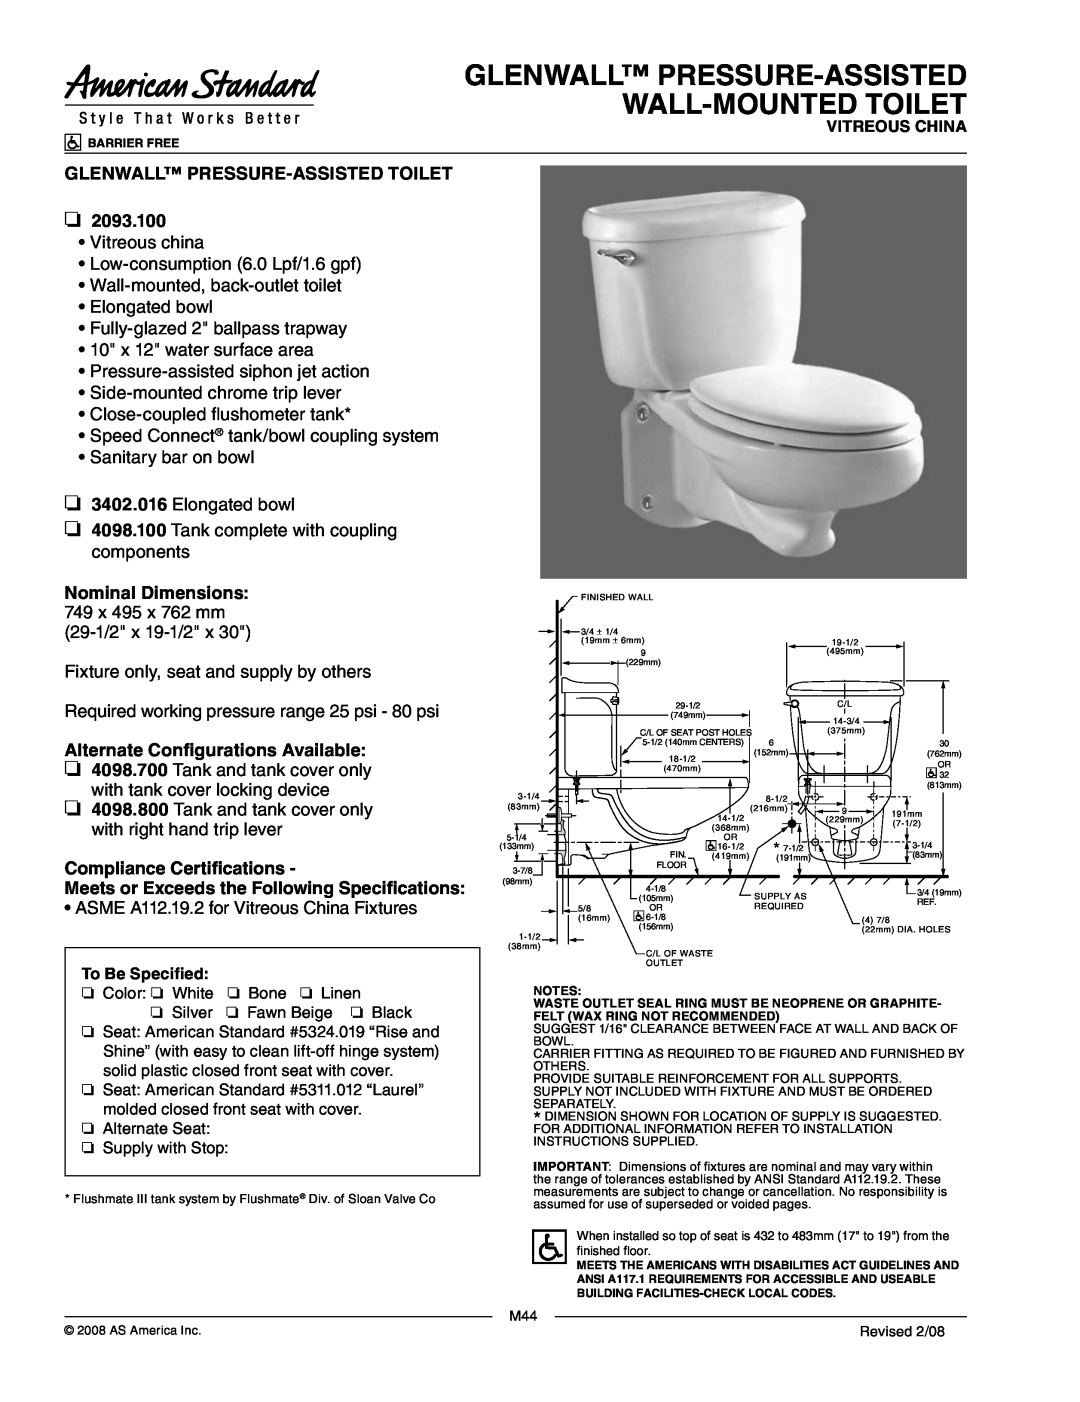 American Standard 4098.100 dimensions Glenwall Pressure-Assisted Wall-Mounted Toilet, Glenwall Pressure-Assisted Toilet 